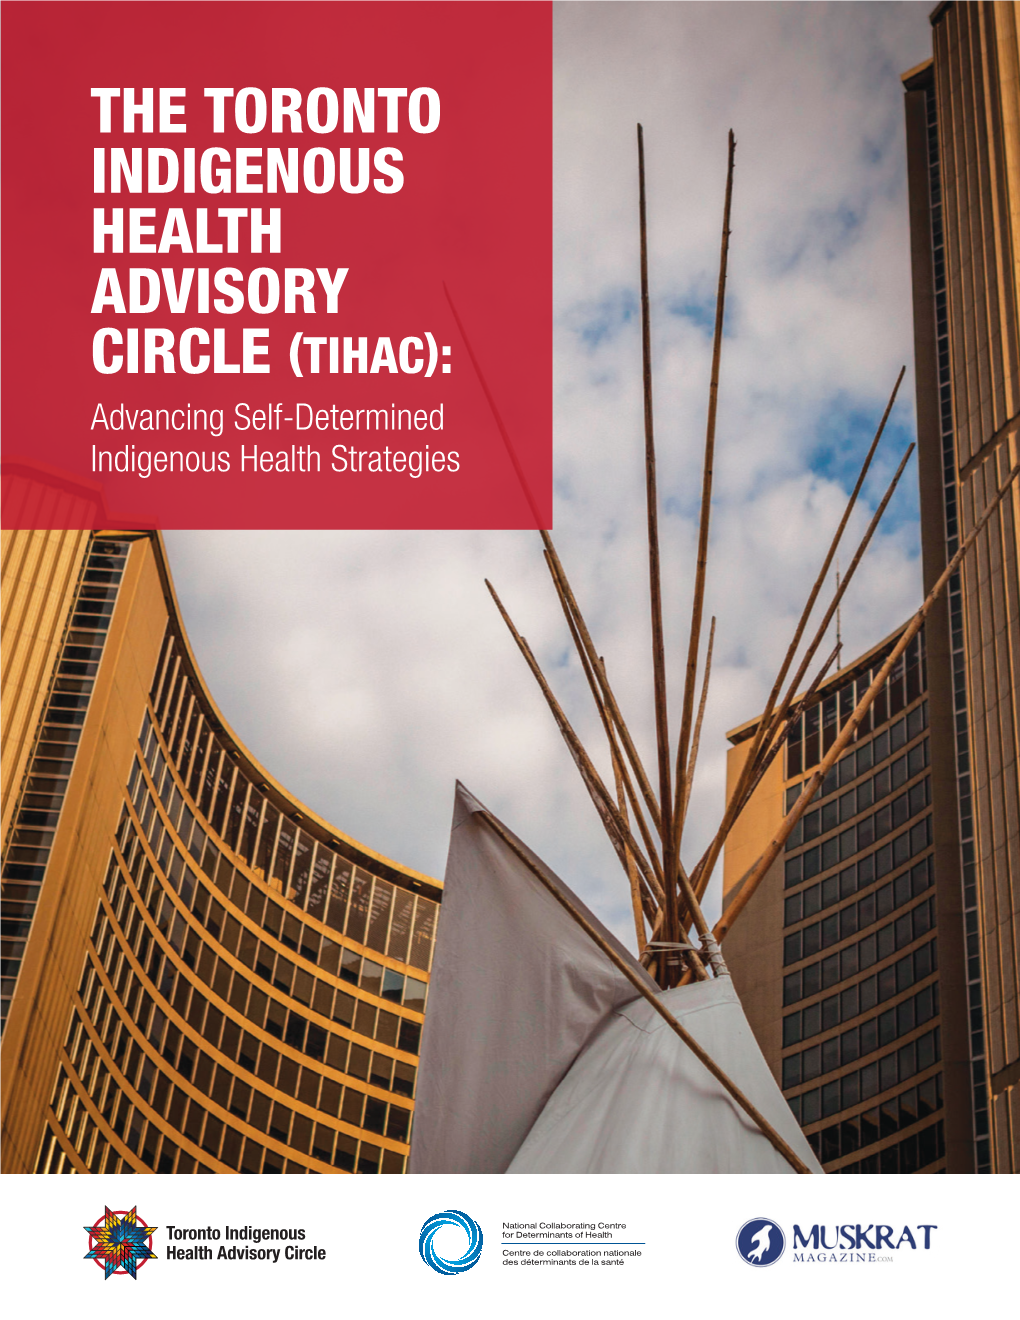 The Toronto Indigenous Health Advisory